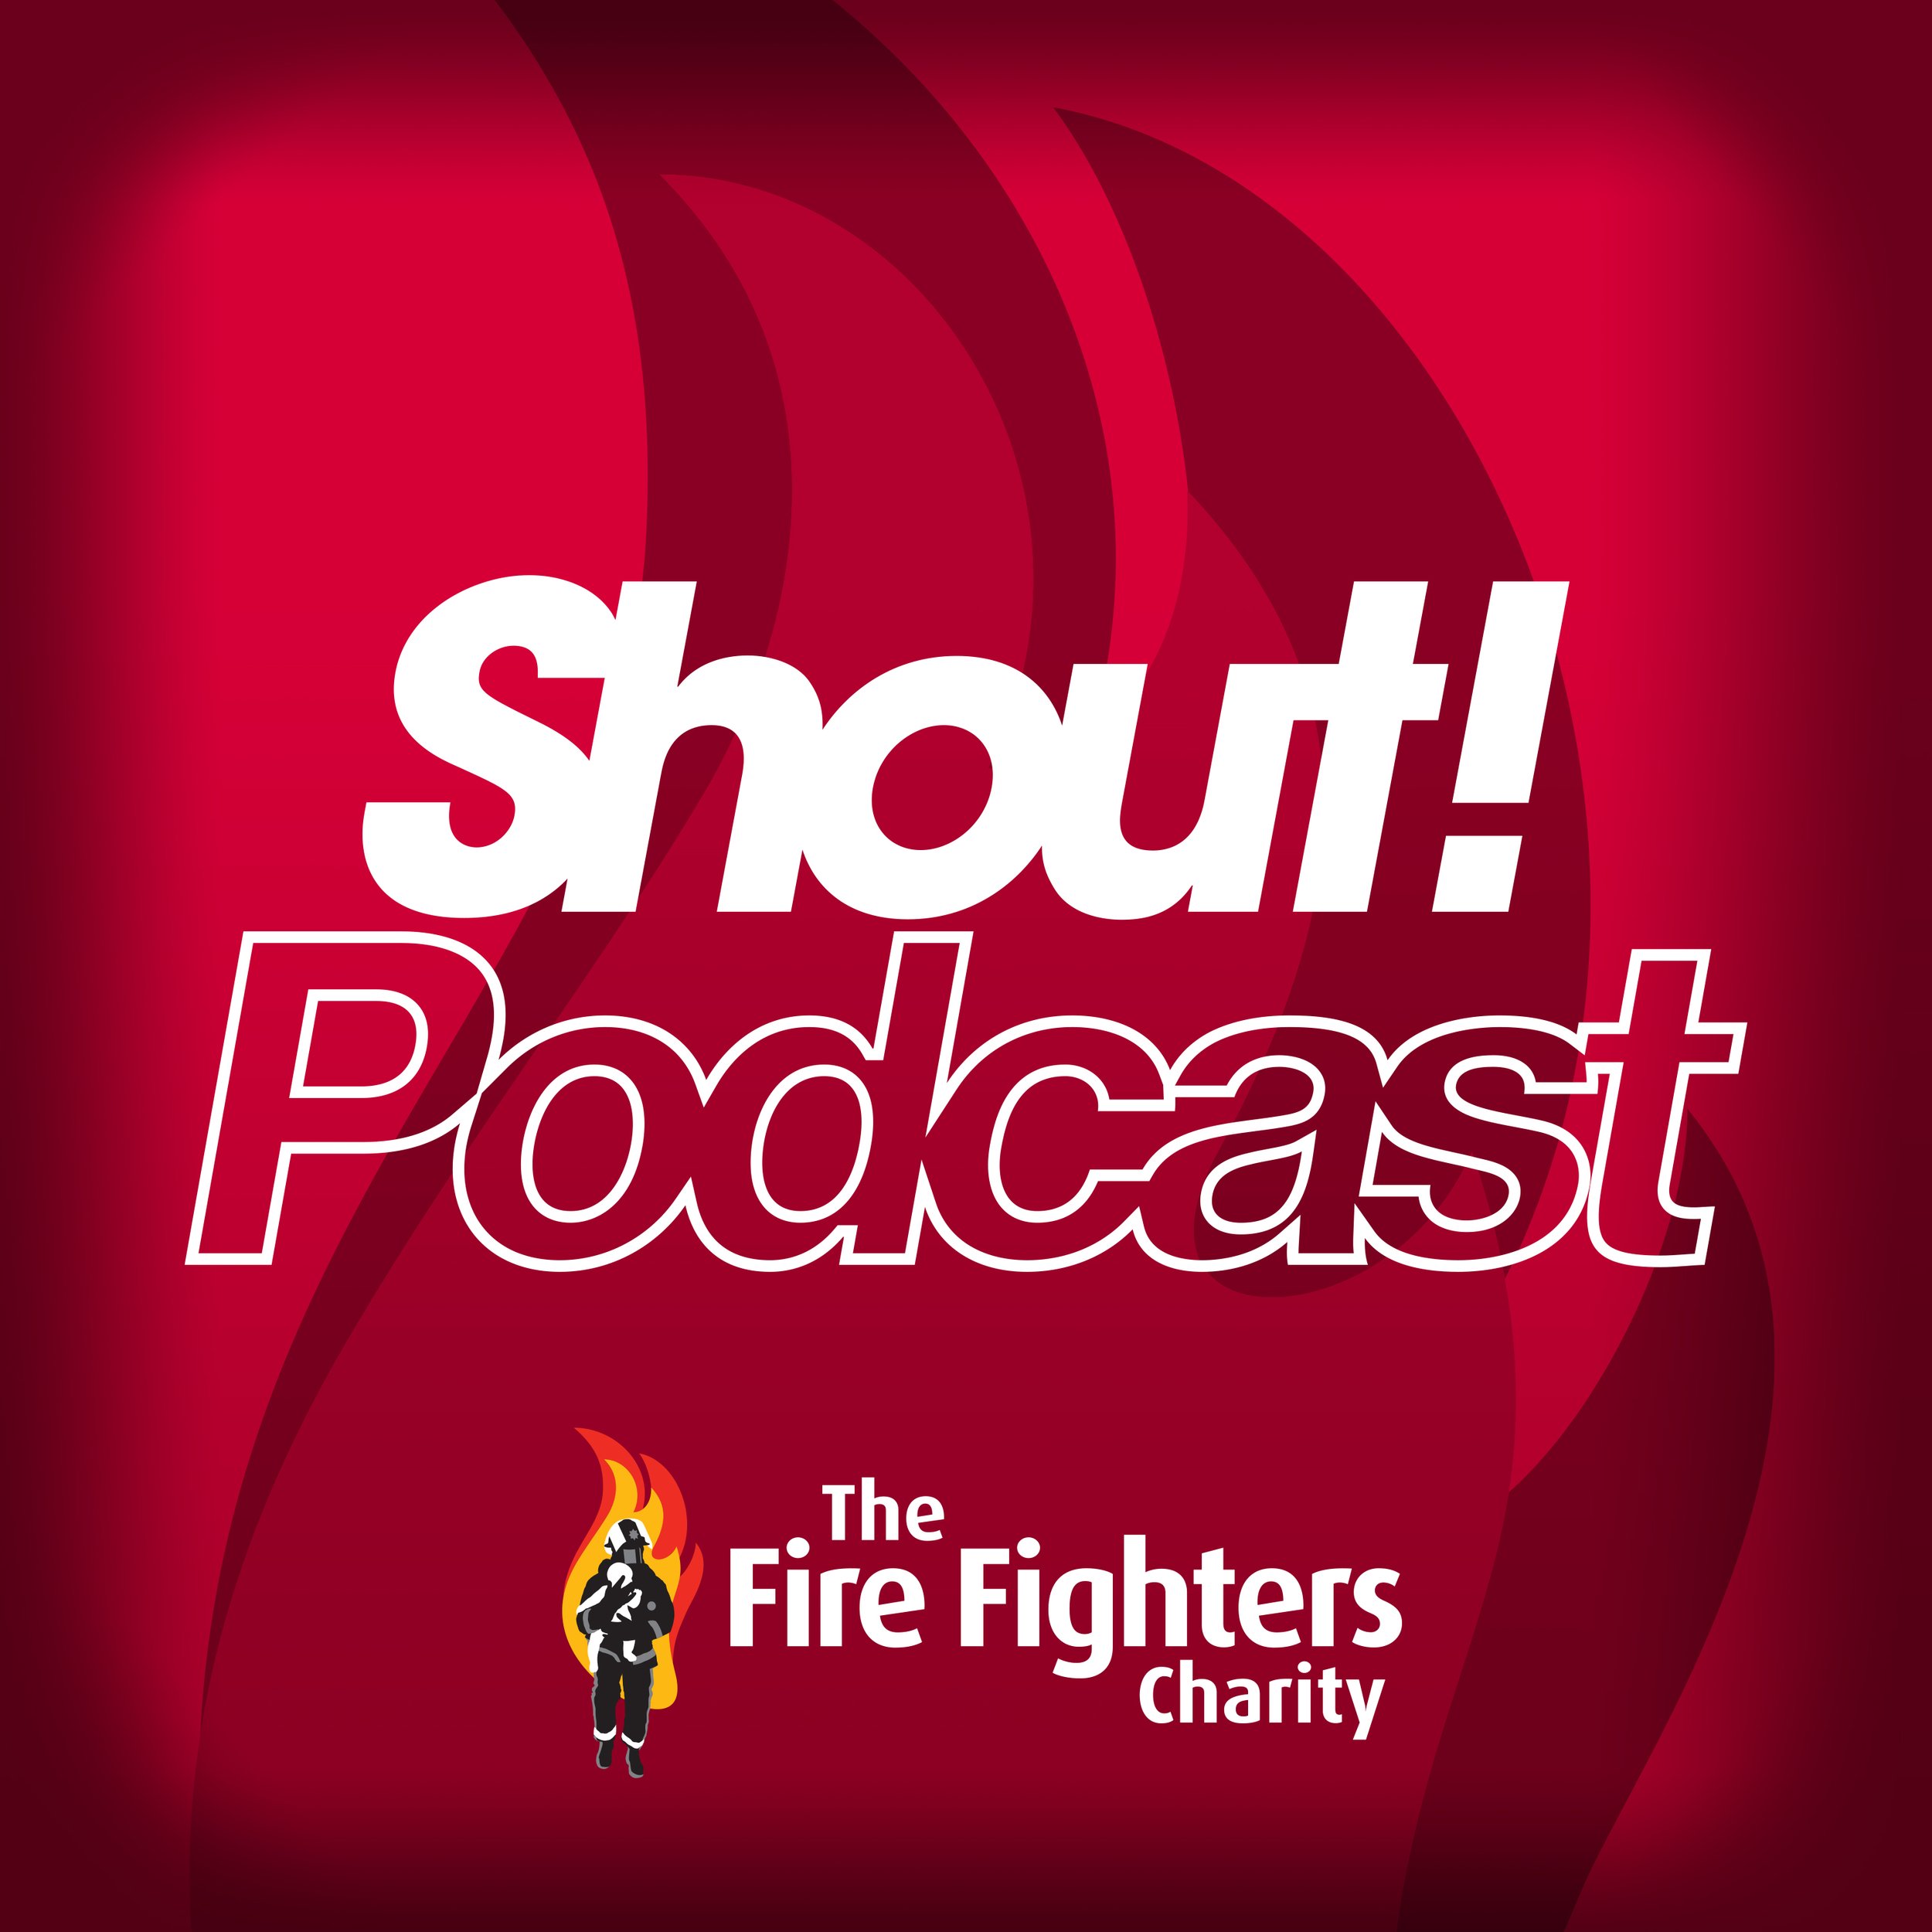 Shout!Podcast Logo.jpg